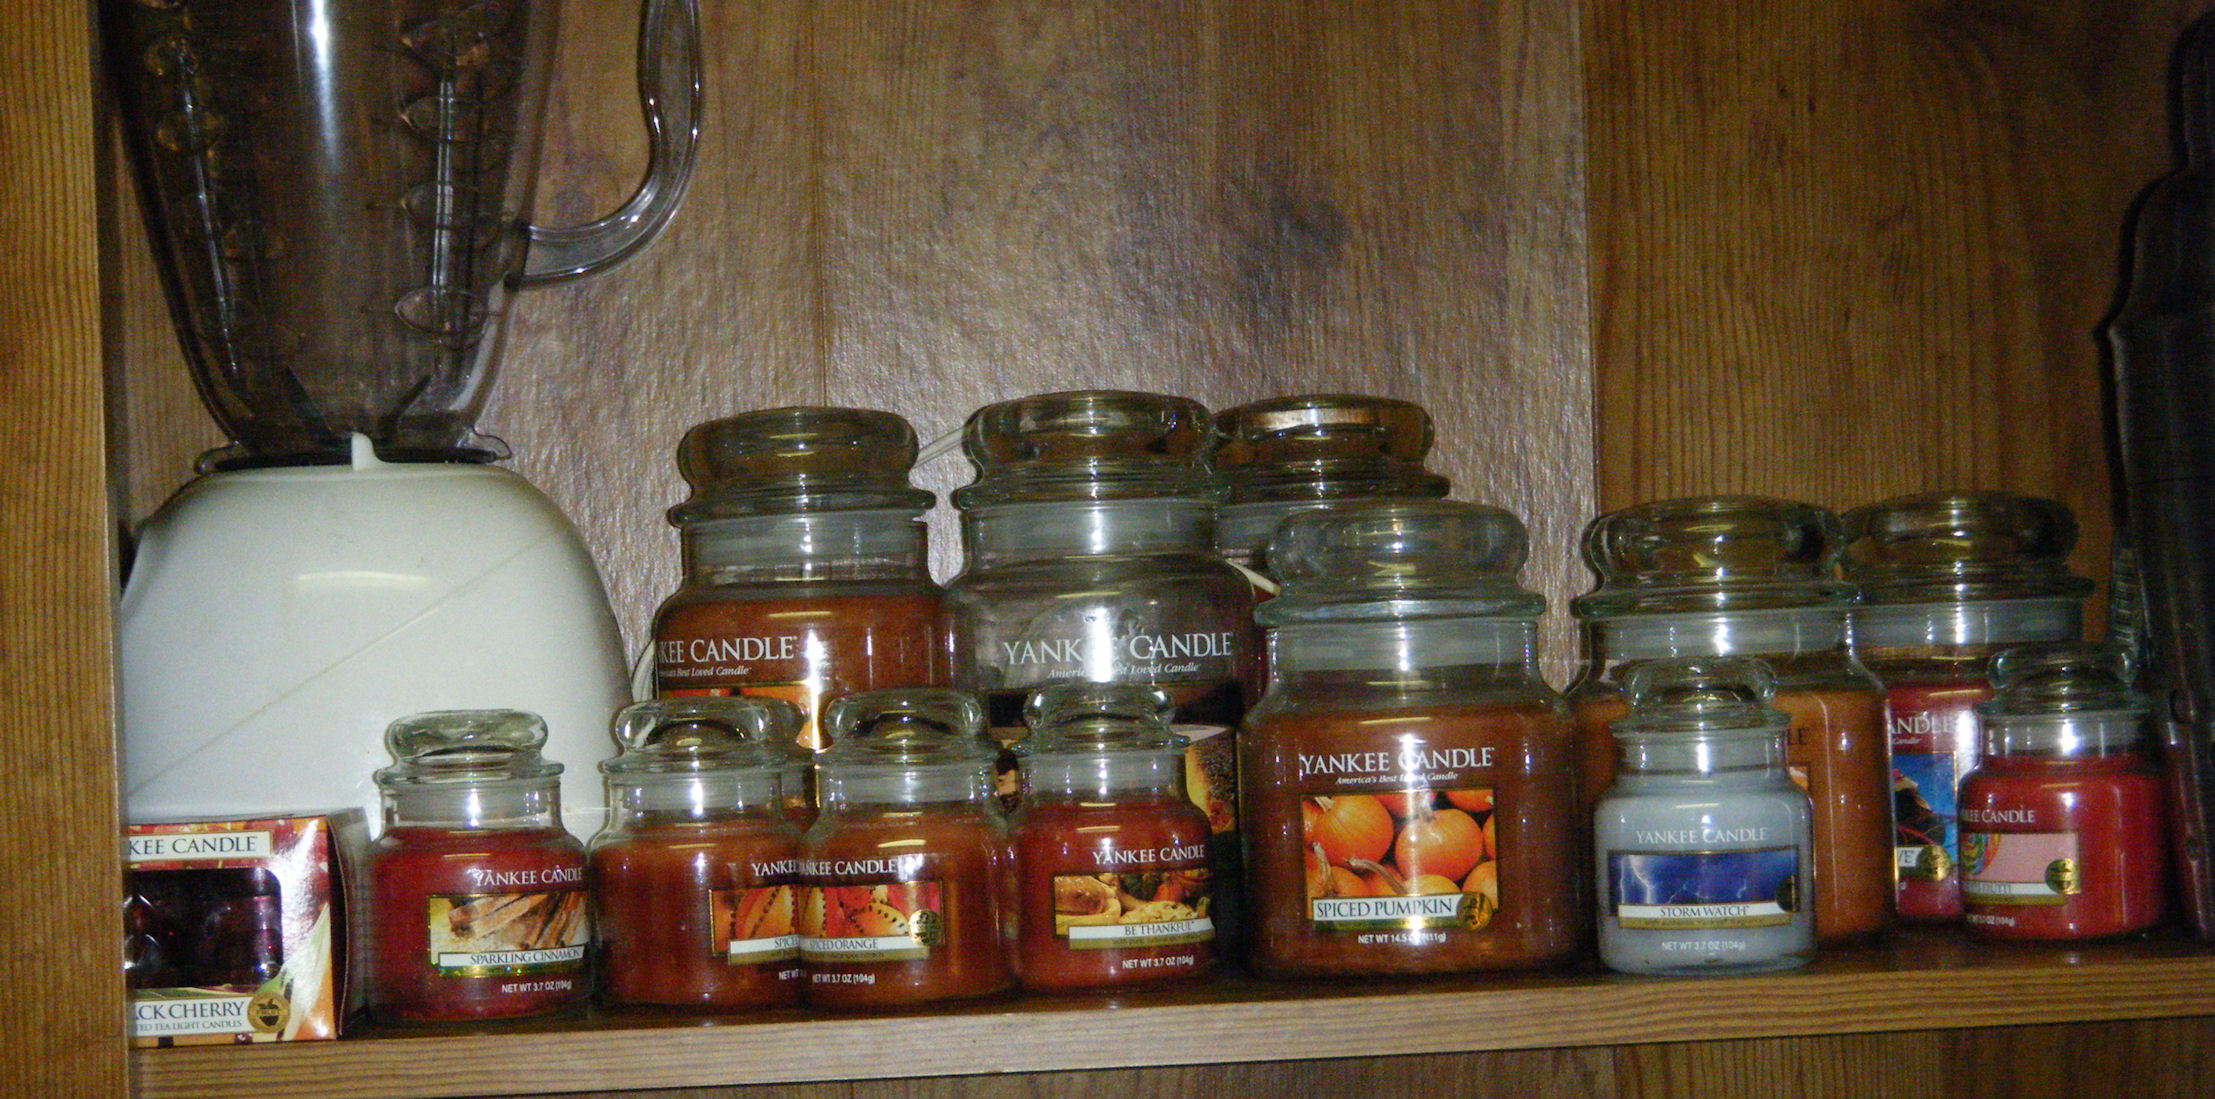 Top shelf of candle hutch